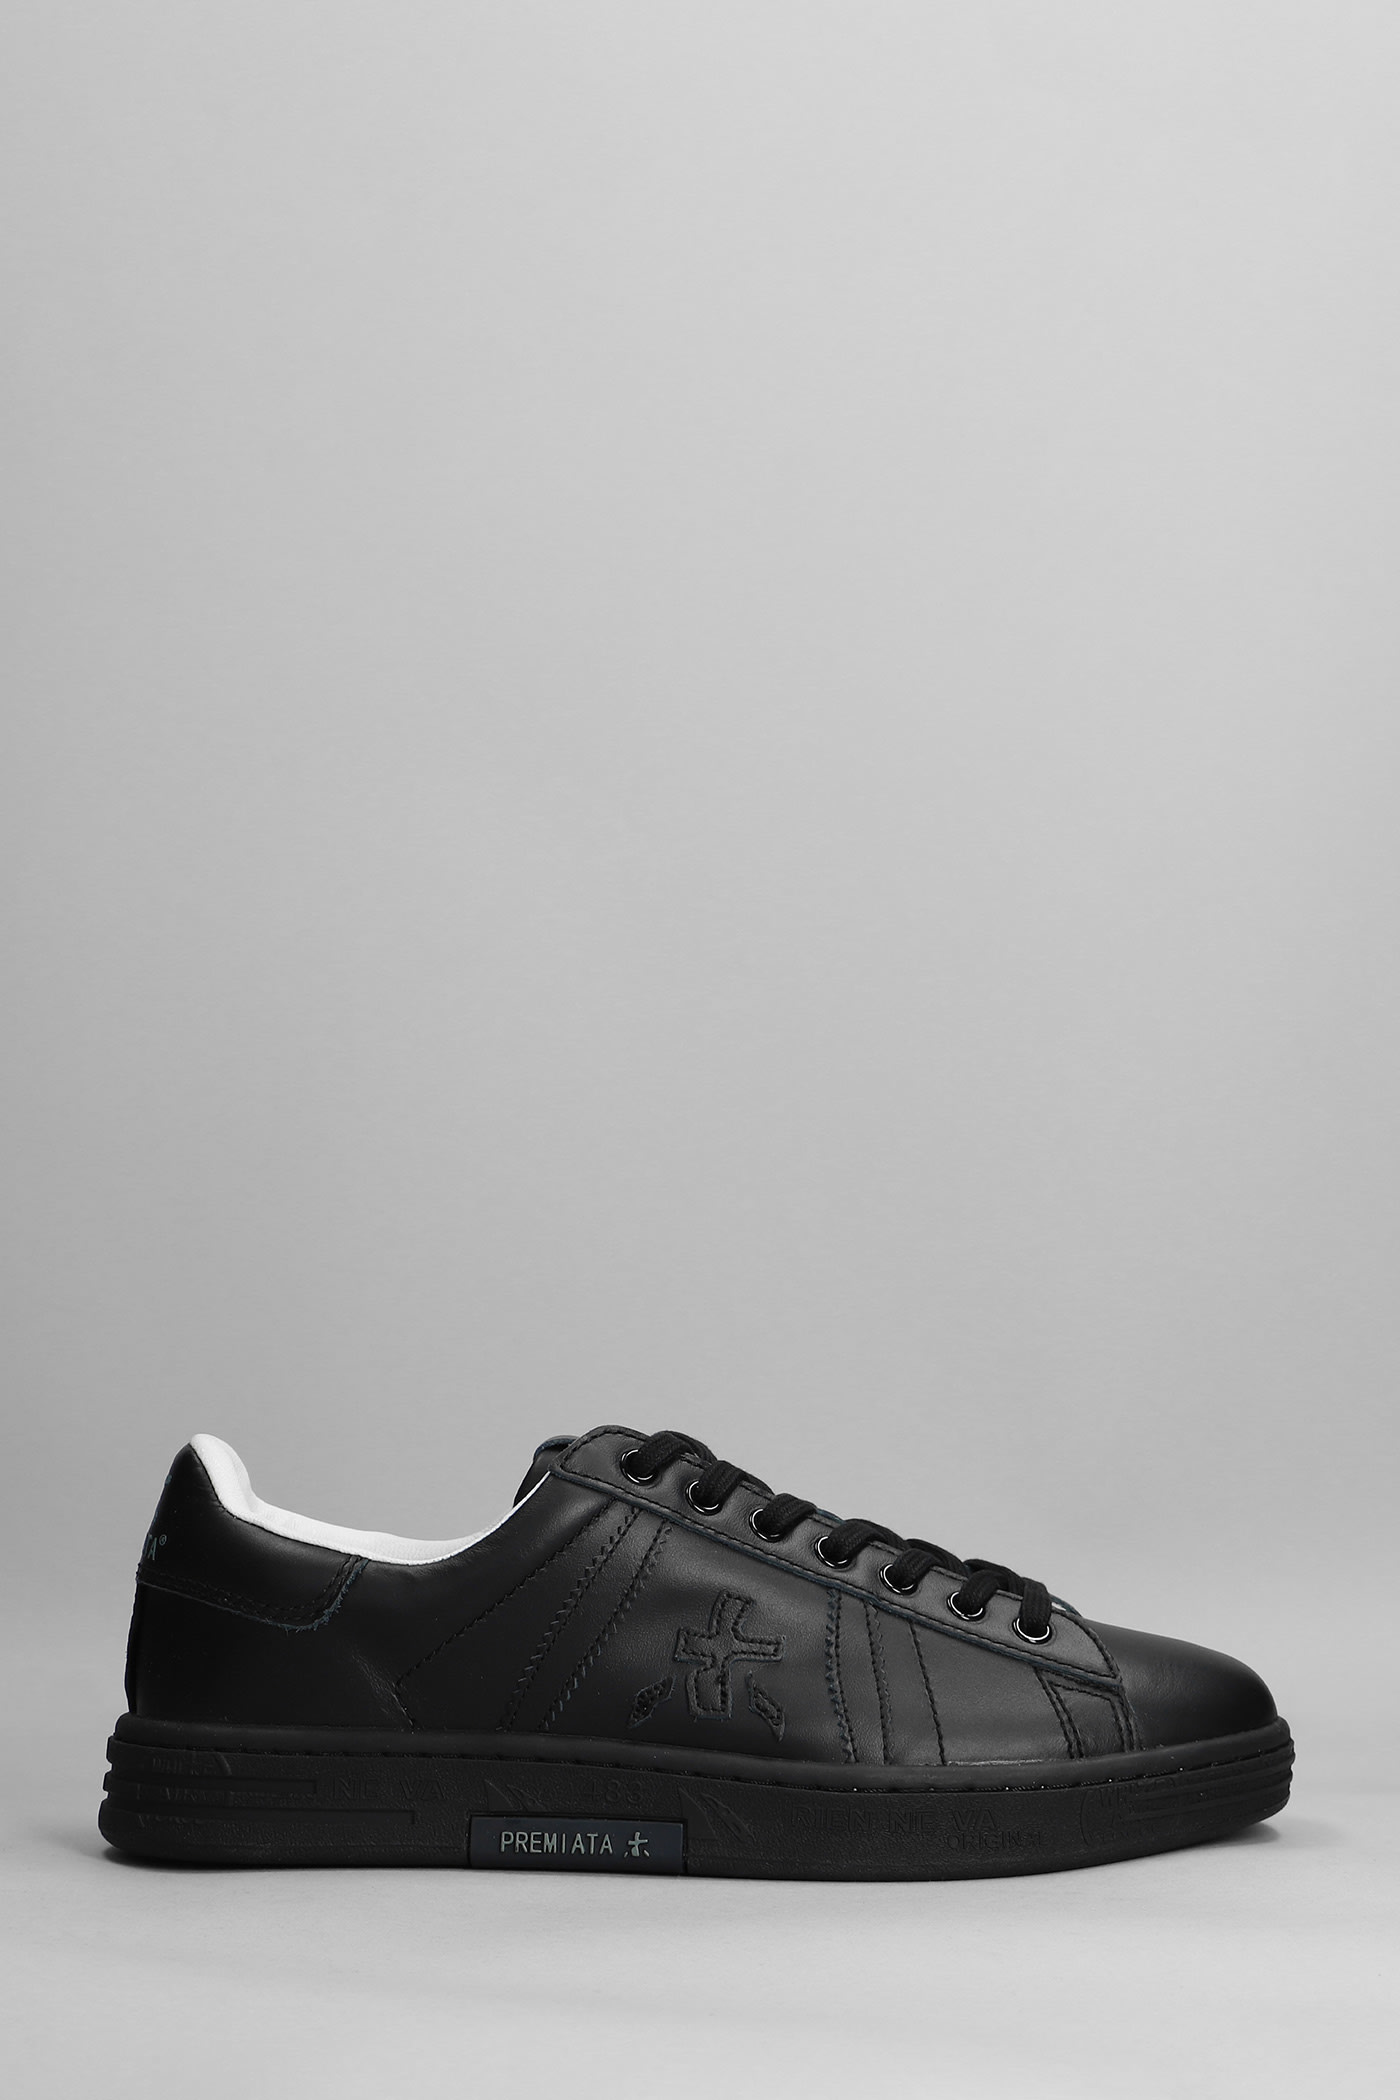 Premiata Russel Sneakers In Black Leather